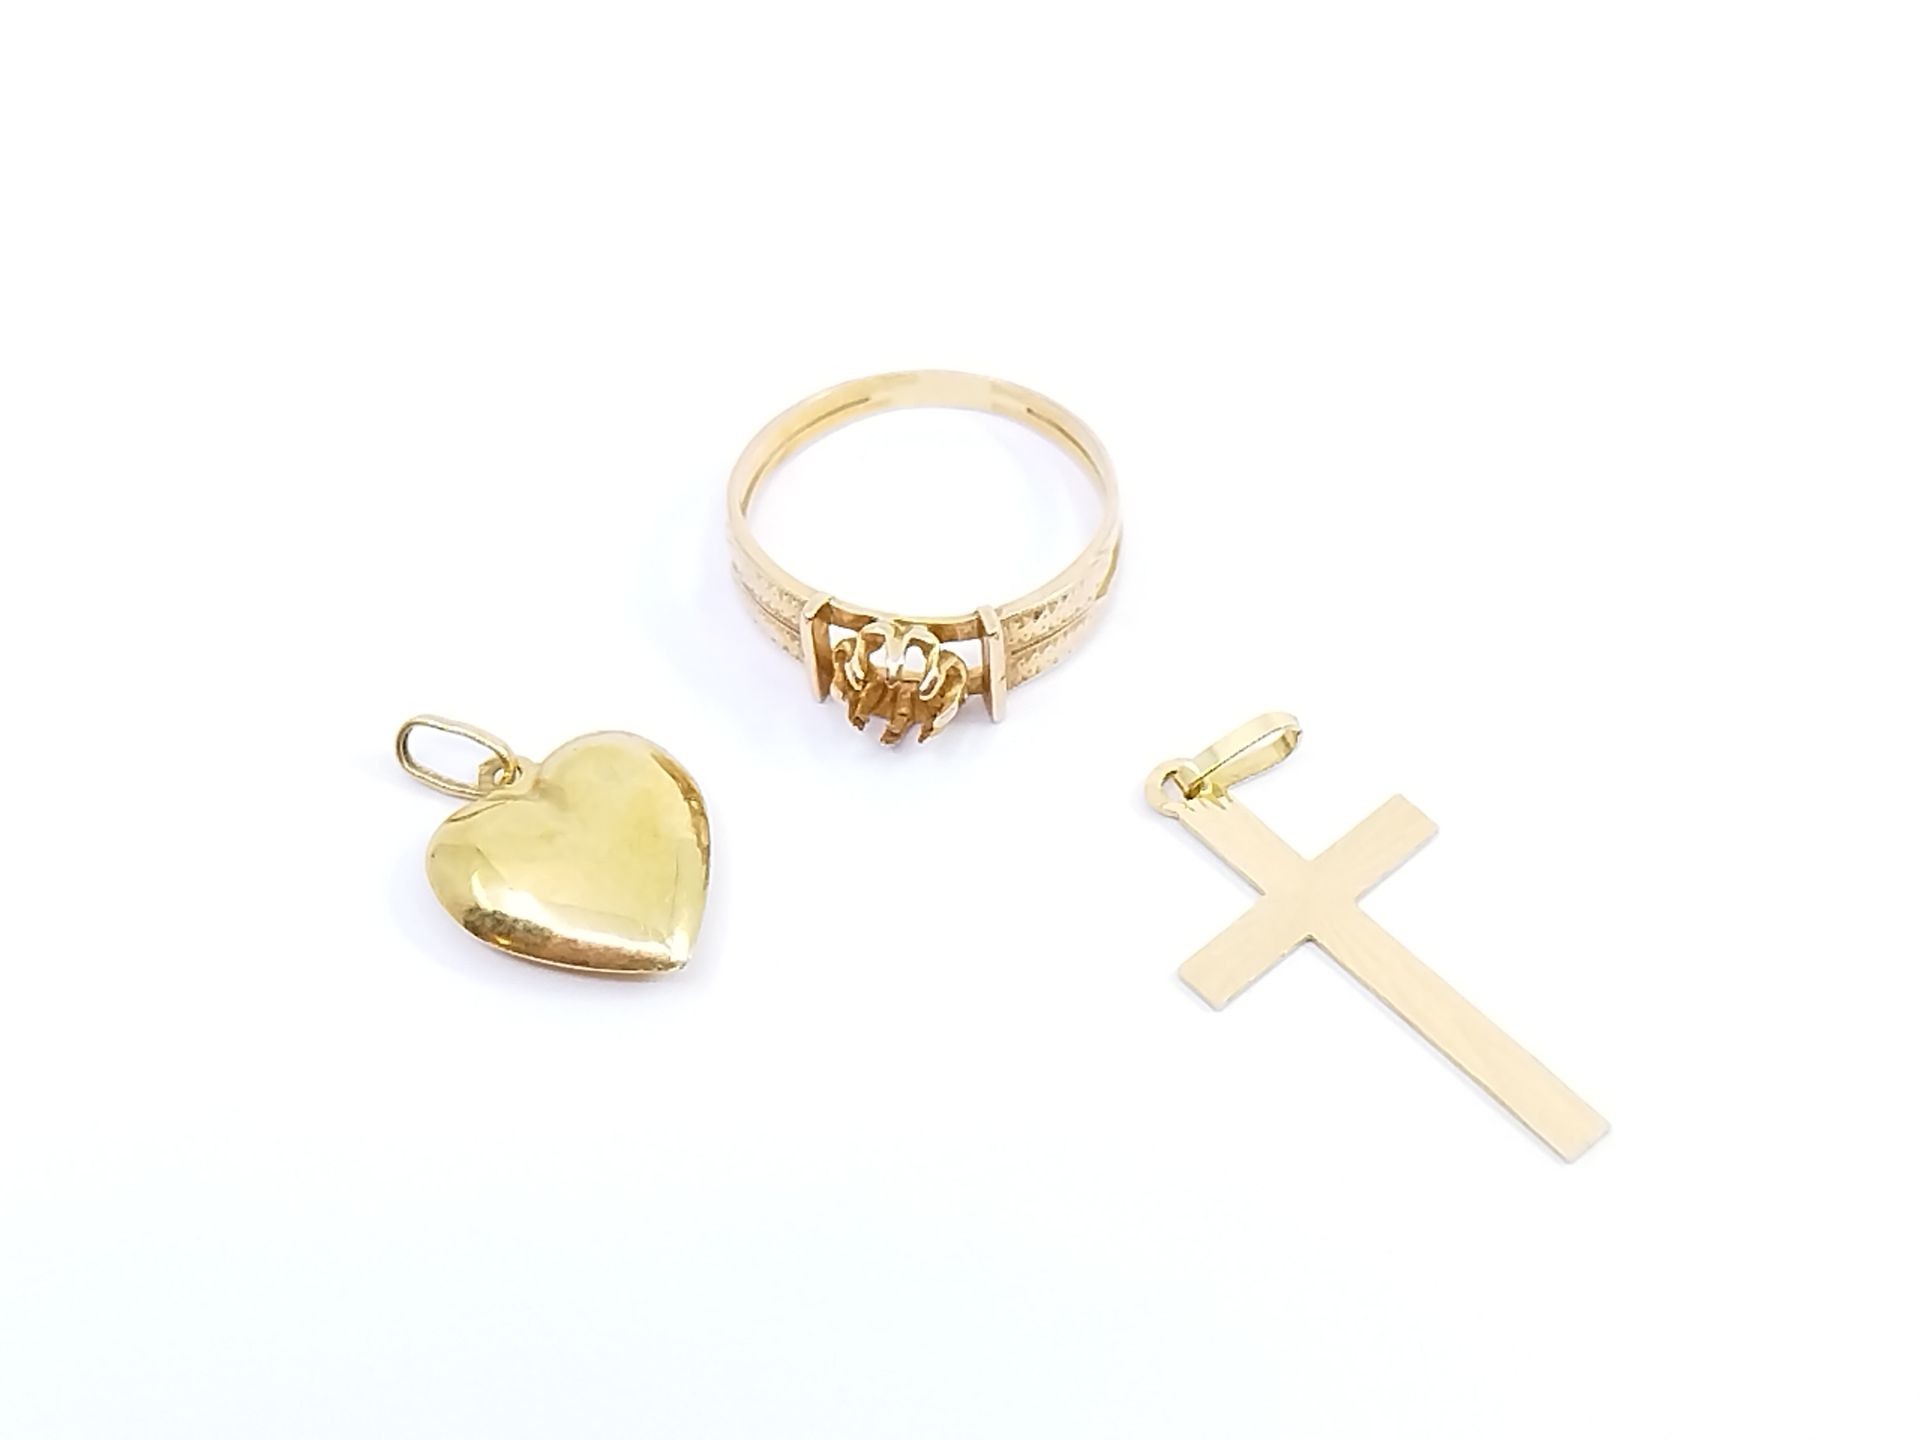 Null 一批750°的黄金，包括:

十字架、心形吊坠、戒指镶嵌

重量 : 2,69 g